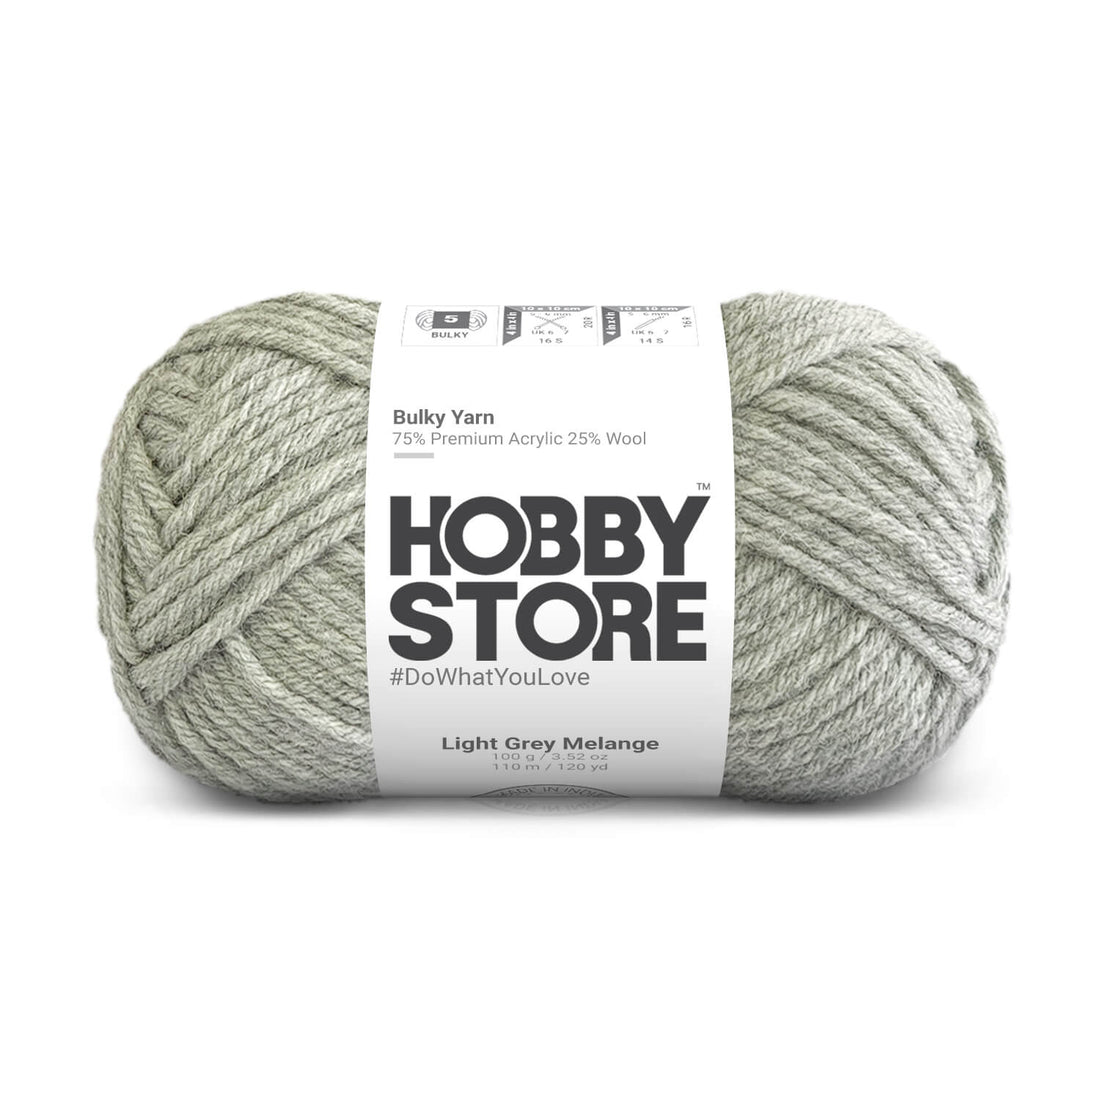 Bulky Yarn by Hobby Store - Light Grey Melange 6011